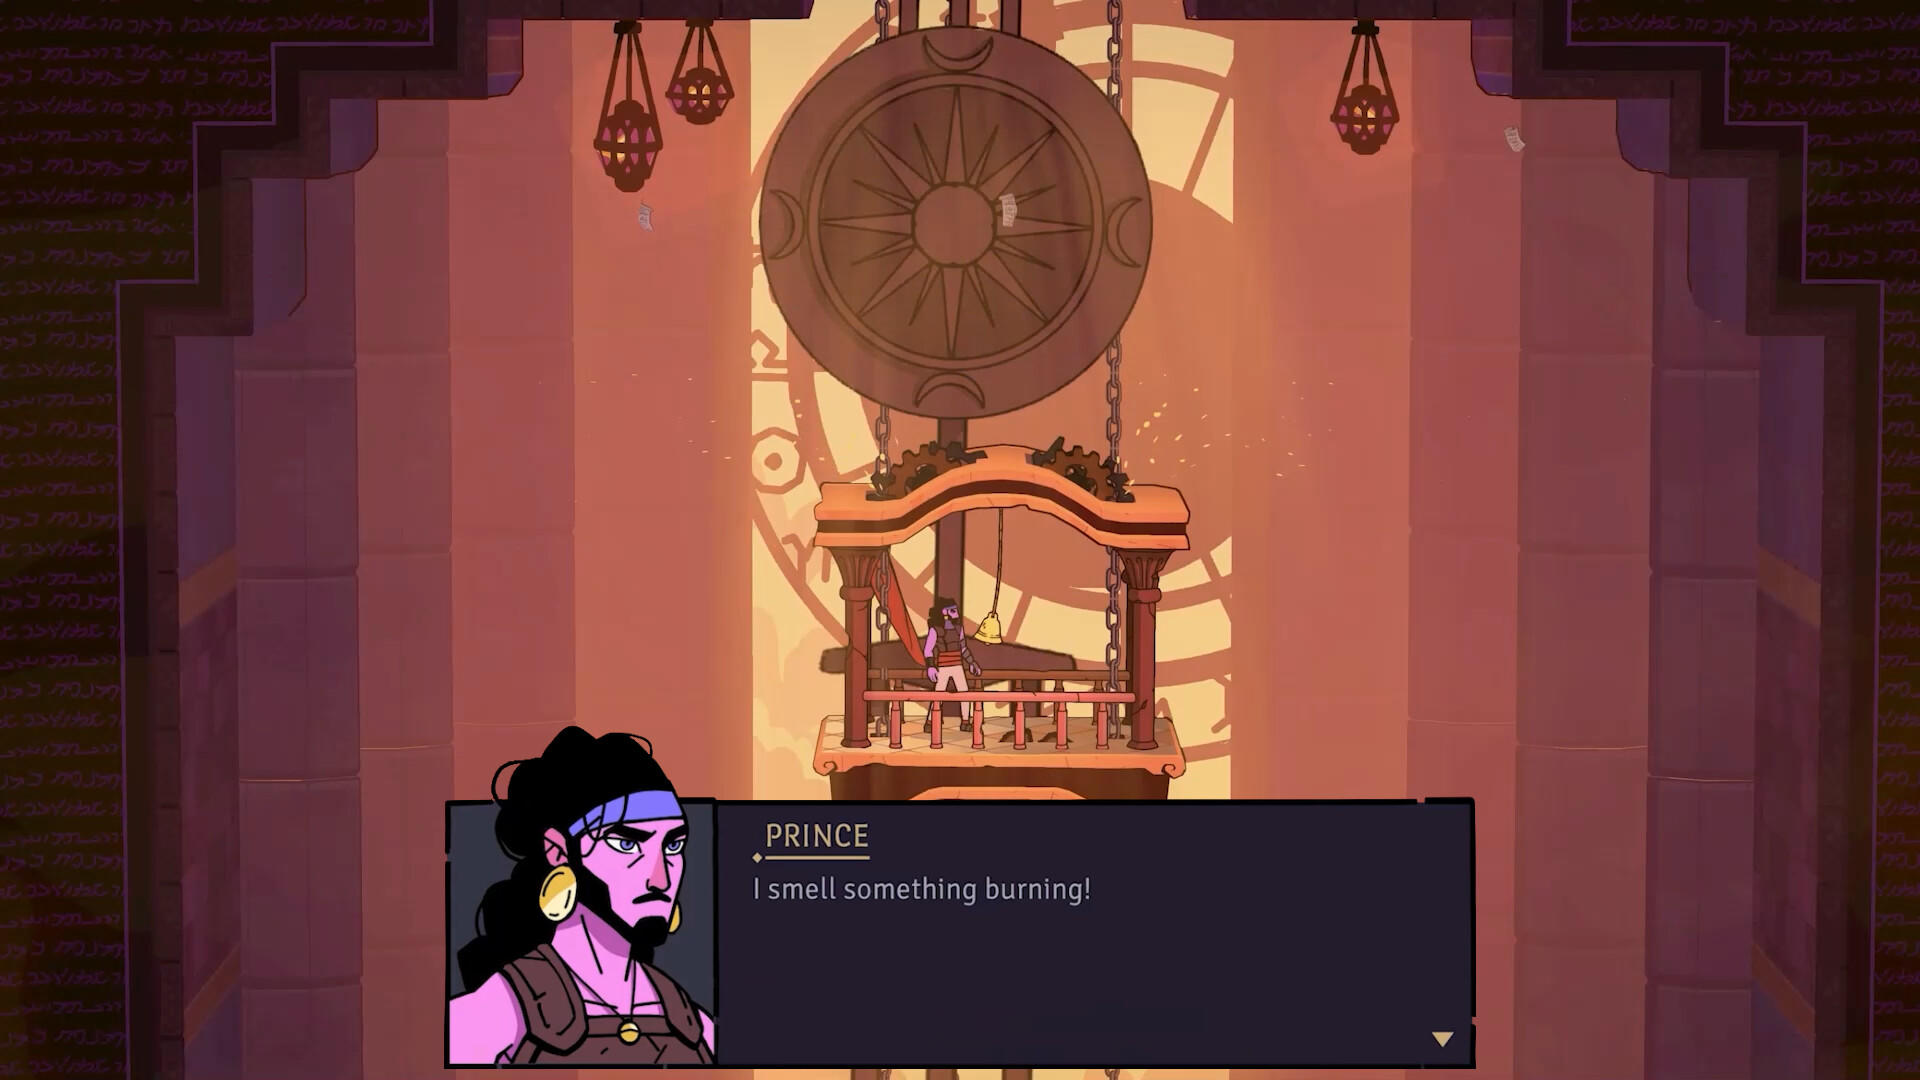 The Rogue Prince of Persia screenshot game